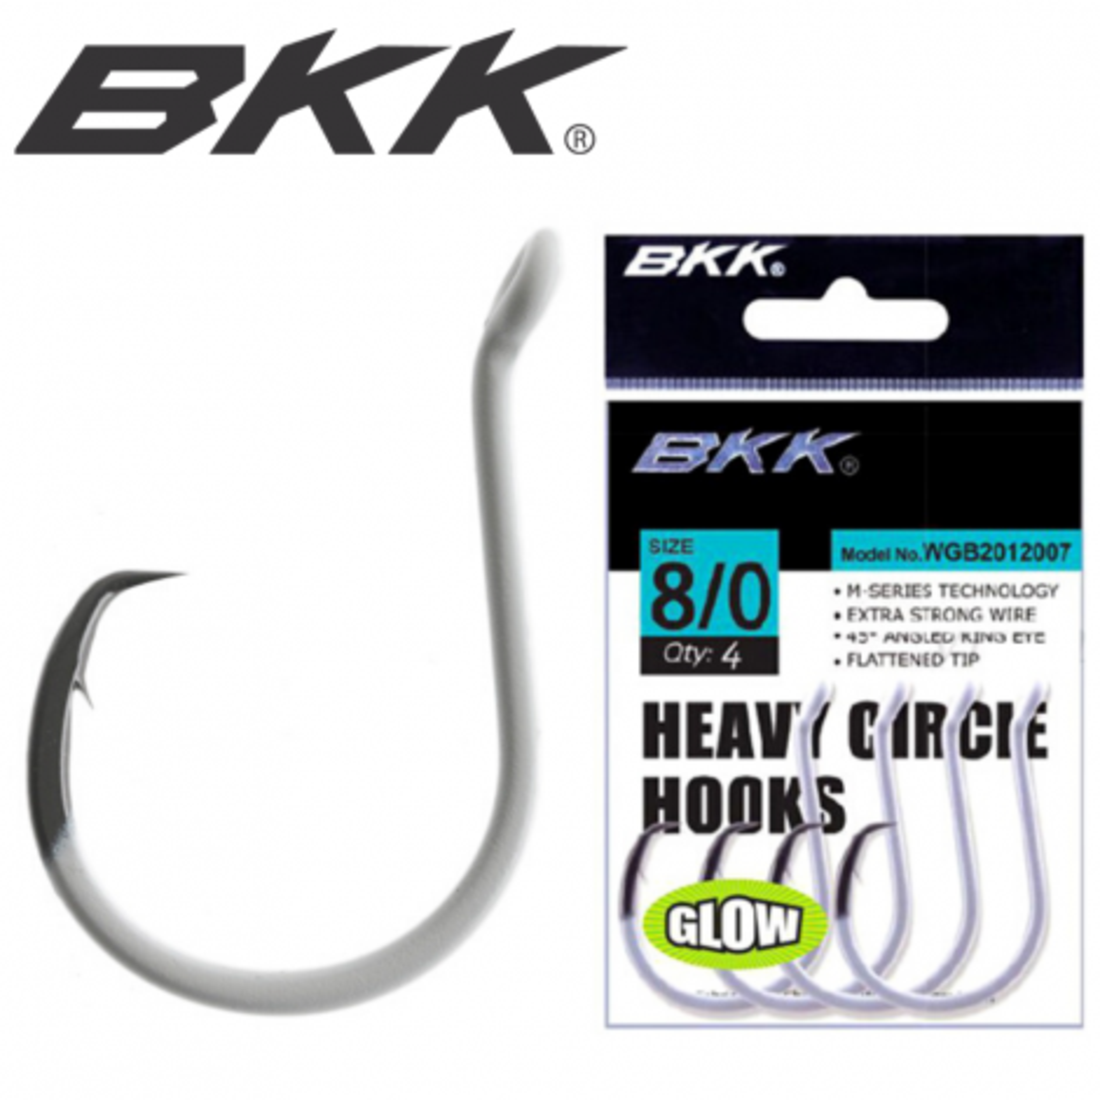 BKK Heavy Circle Hooks Glow